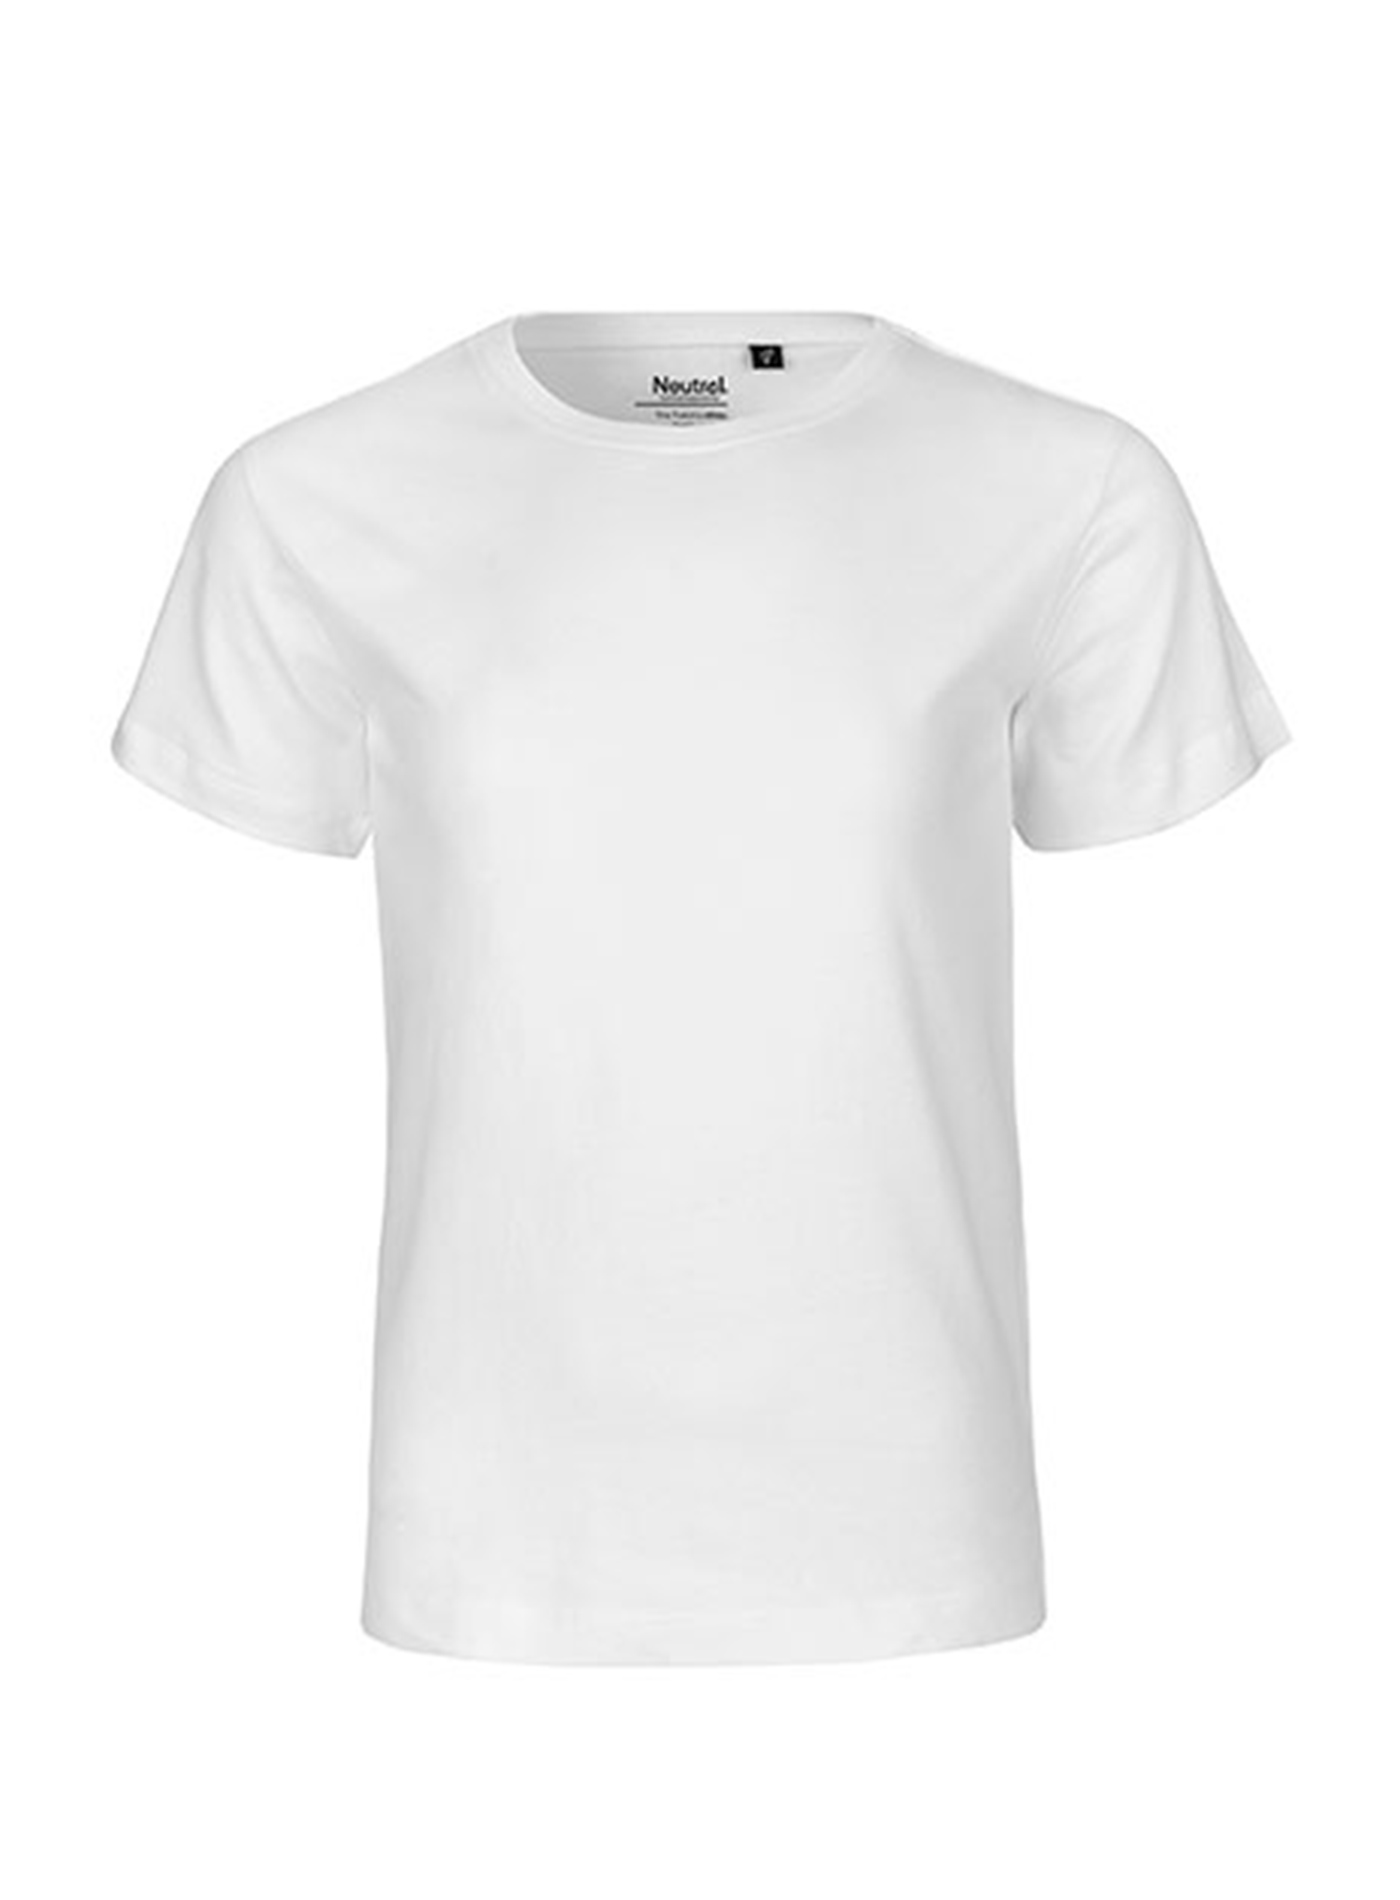 Dětské tričko Neutral - Bílá 104 (3-4)